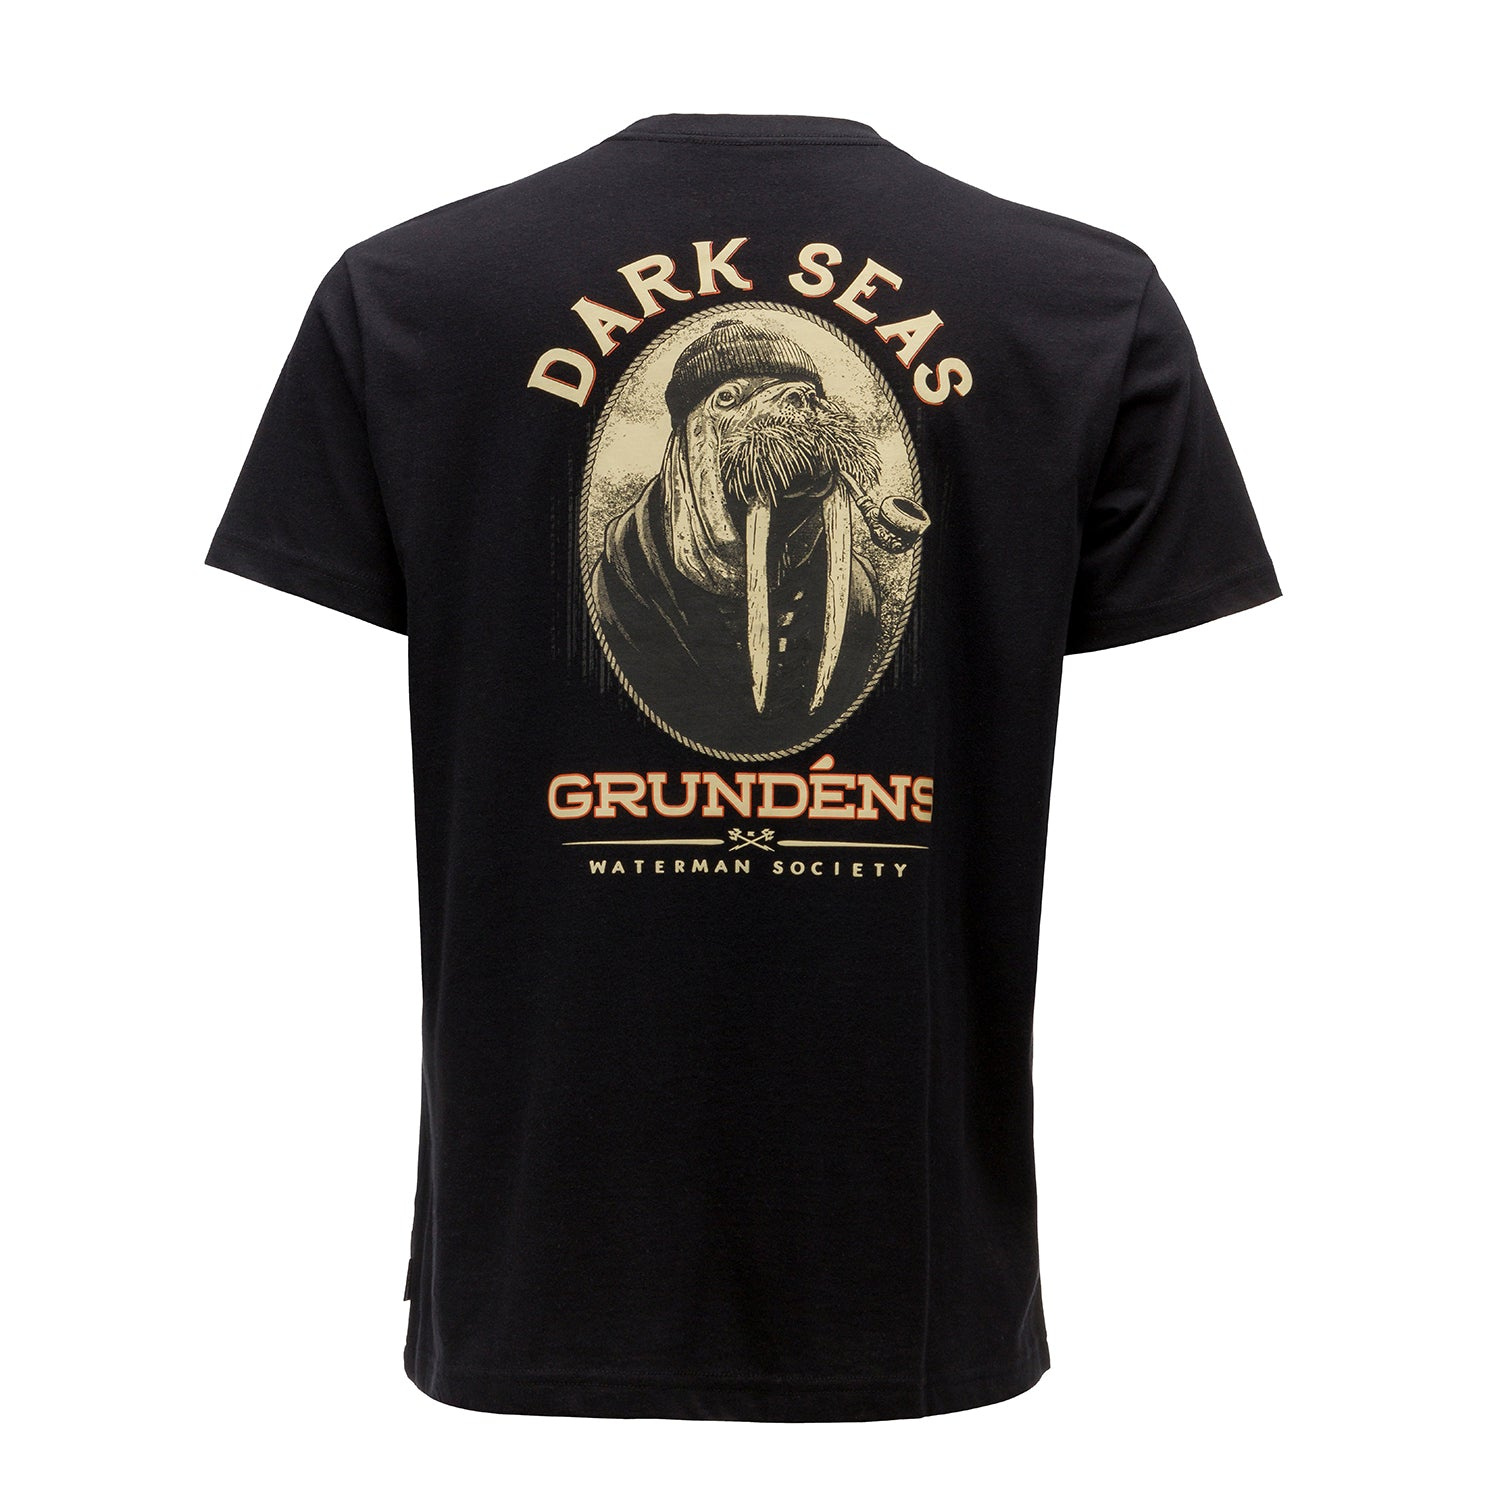 Grundéns Dark Seas X Seaworthy SS T-Shirt Black